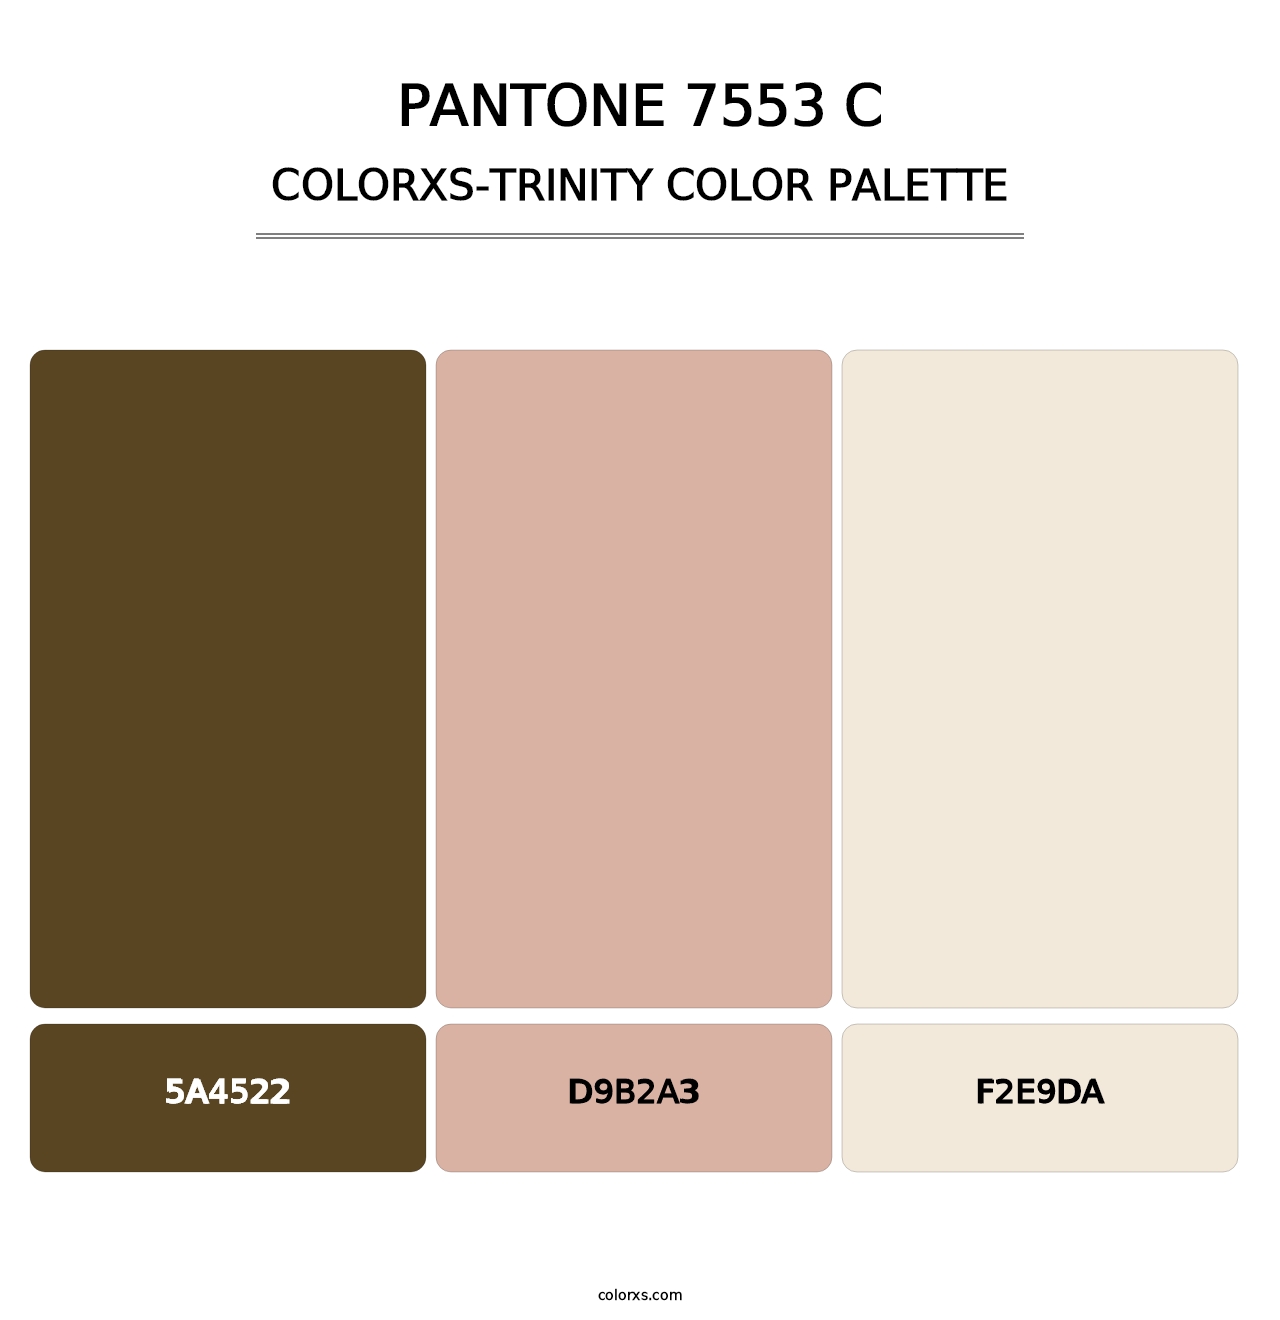 PANTONE 7553 C - Colorxs Trinity Palette